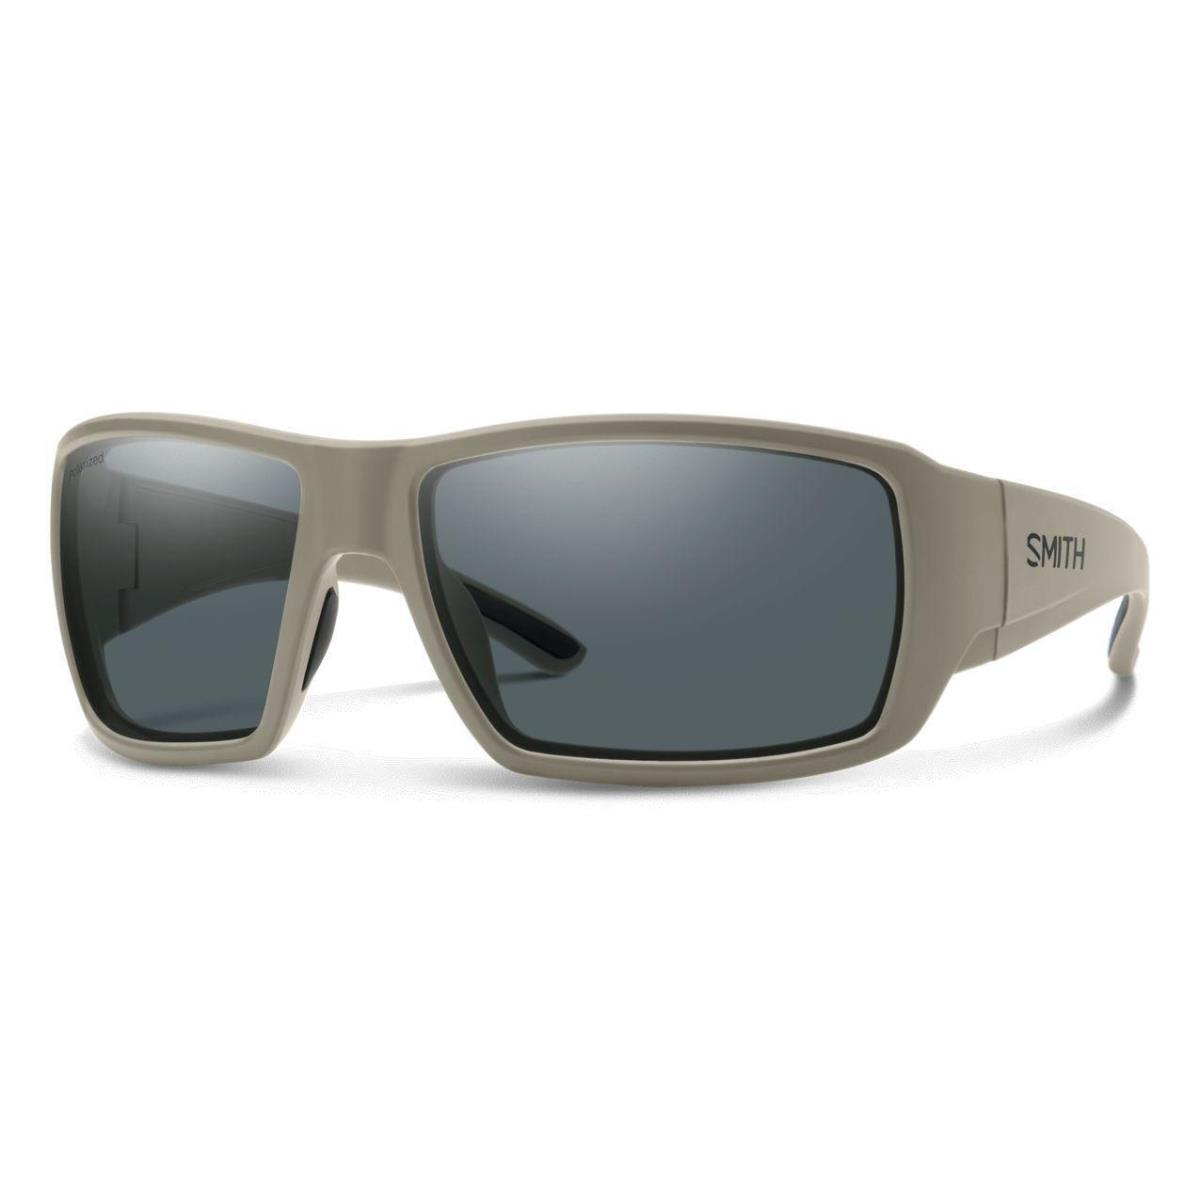 Smith Operator`s Choice Elite Sunglasses Tan 499 - Polarized Gray